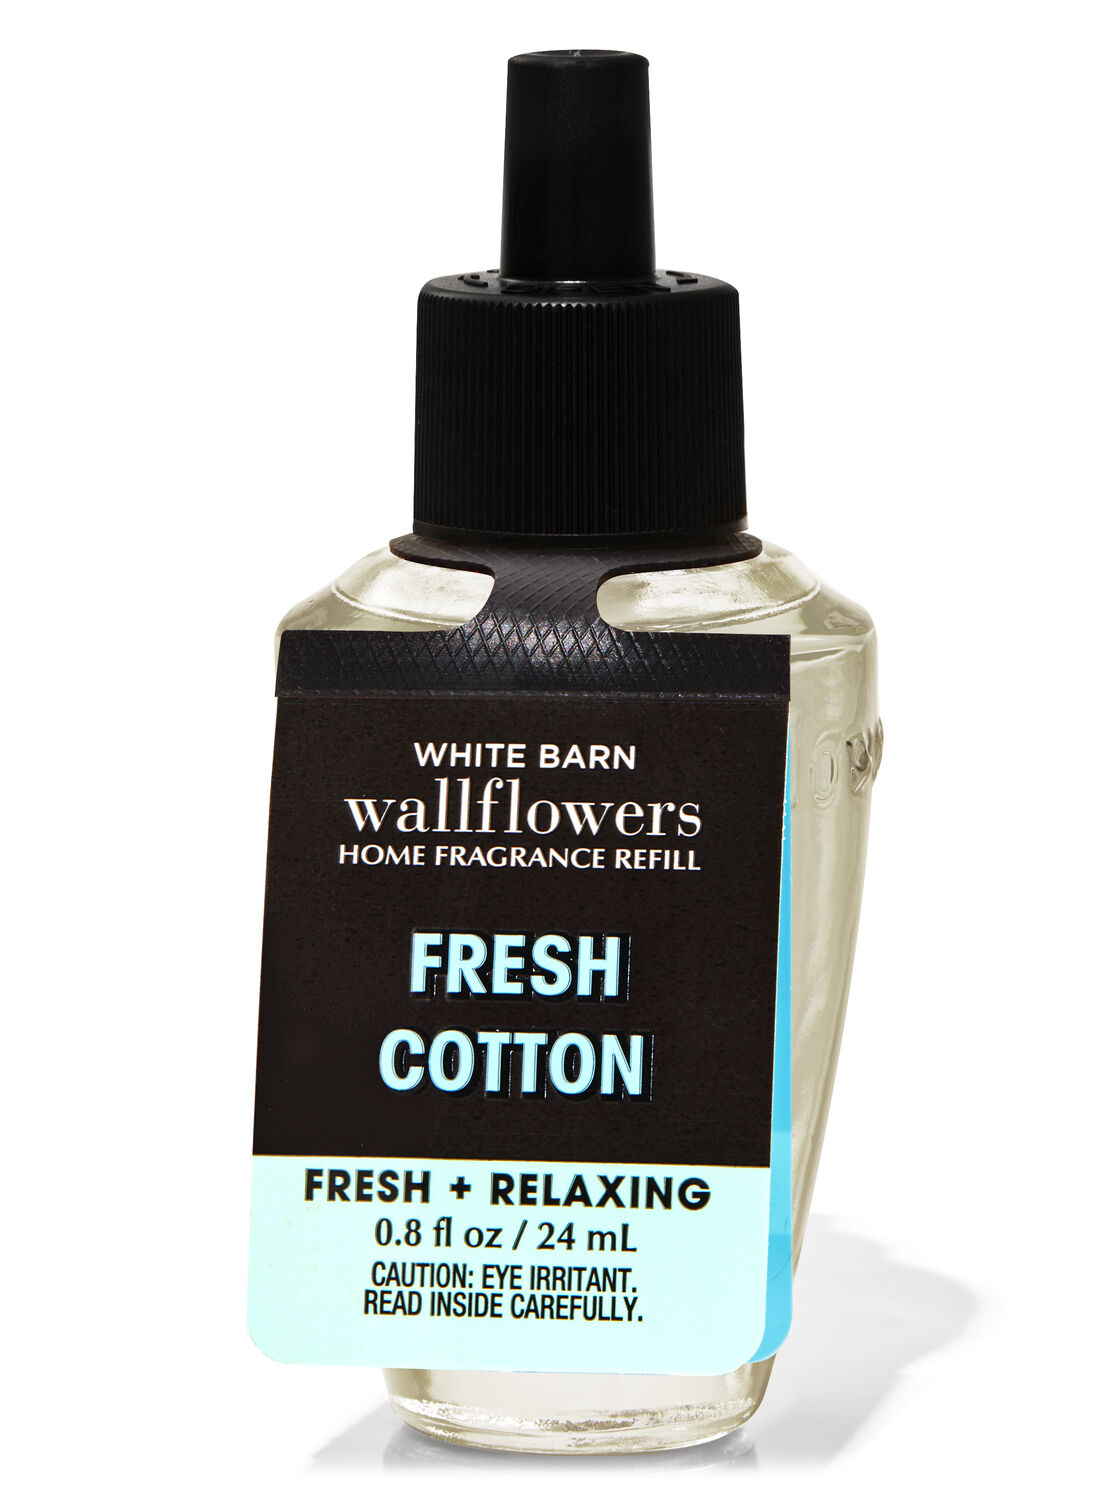 Fresh Cotton Wallflowers Fragrance Refill